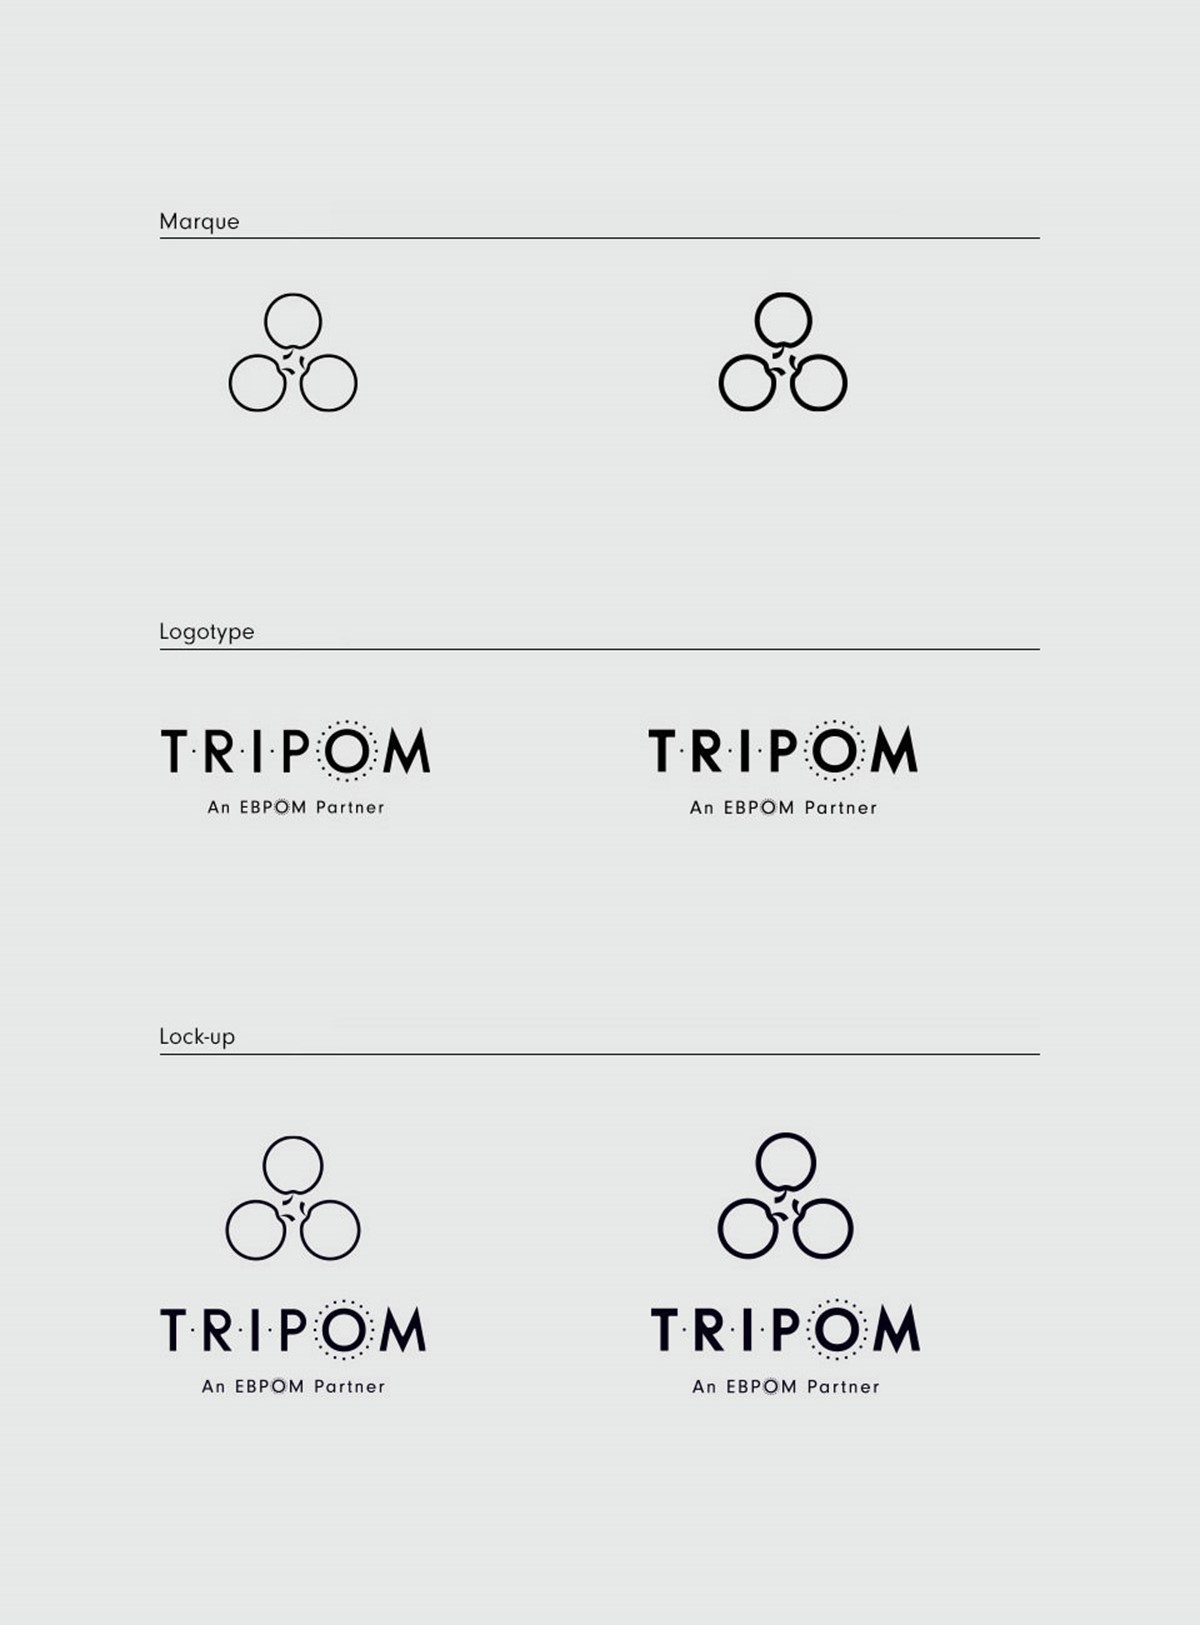 TRIPOM. Logo variations. Brand identity design by Superfried.